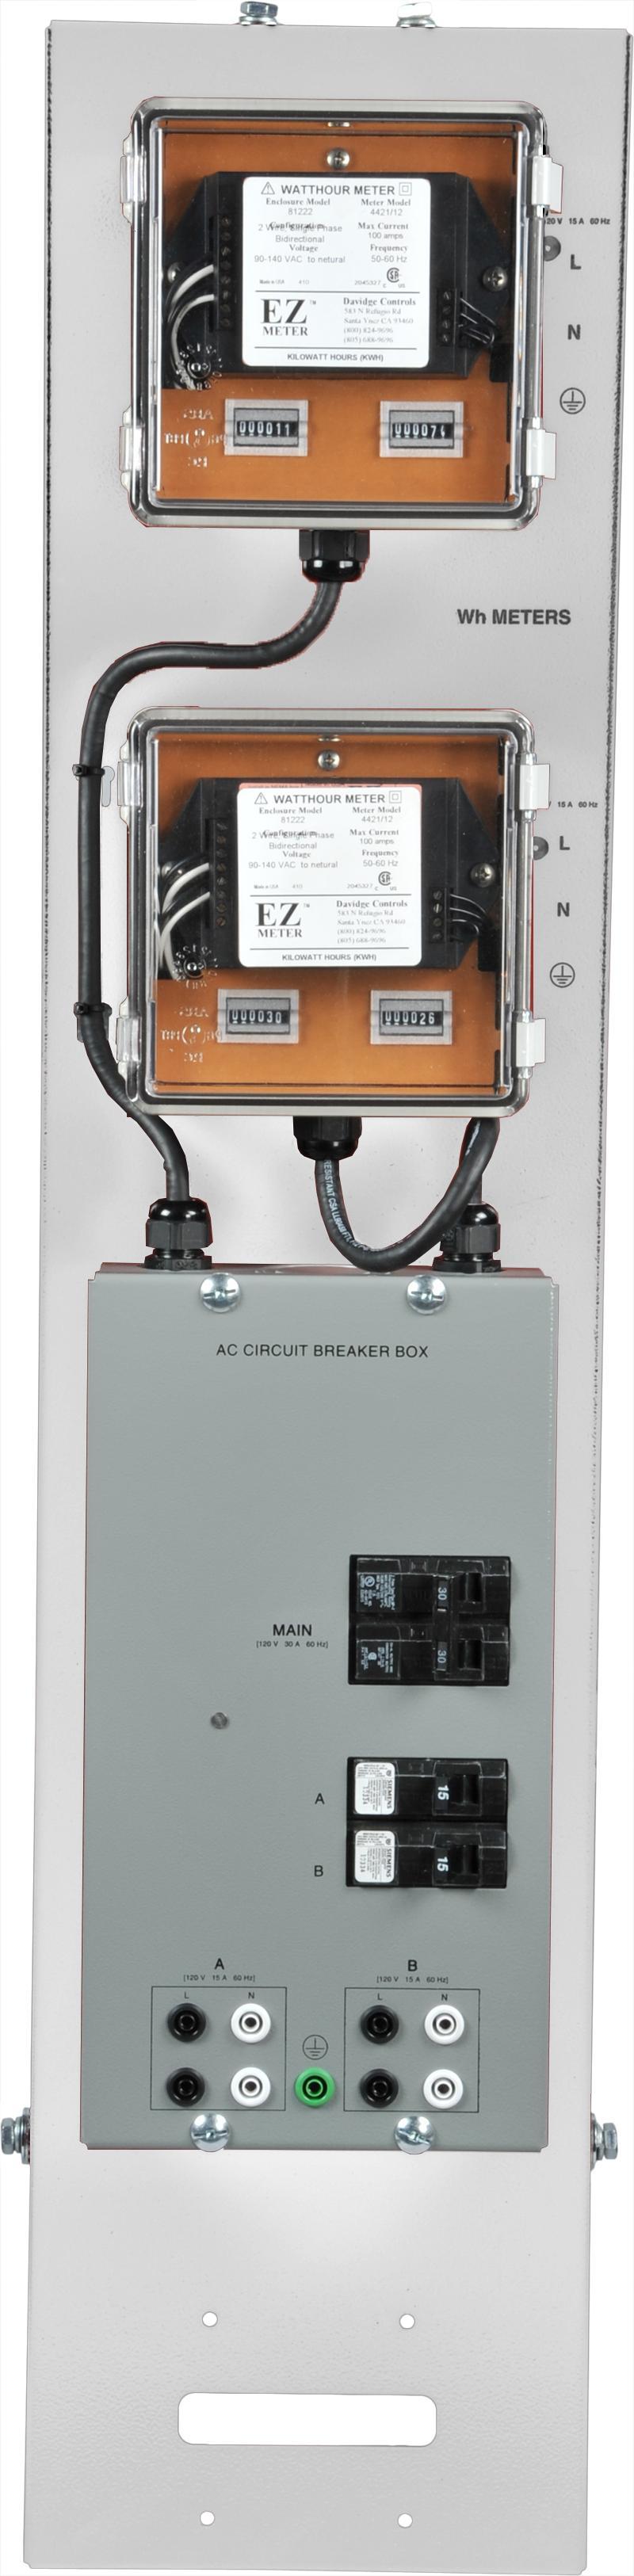 kwh Meters with AC Circuit Breaker Box (UL/CSA Certified) 580065 (66059-A0) The kwh Meters with AC Circuit Breaker Box (UL/CSA Certified) consists of two kwh meters and a circuit-breaker box.